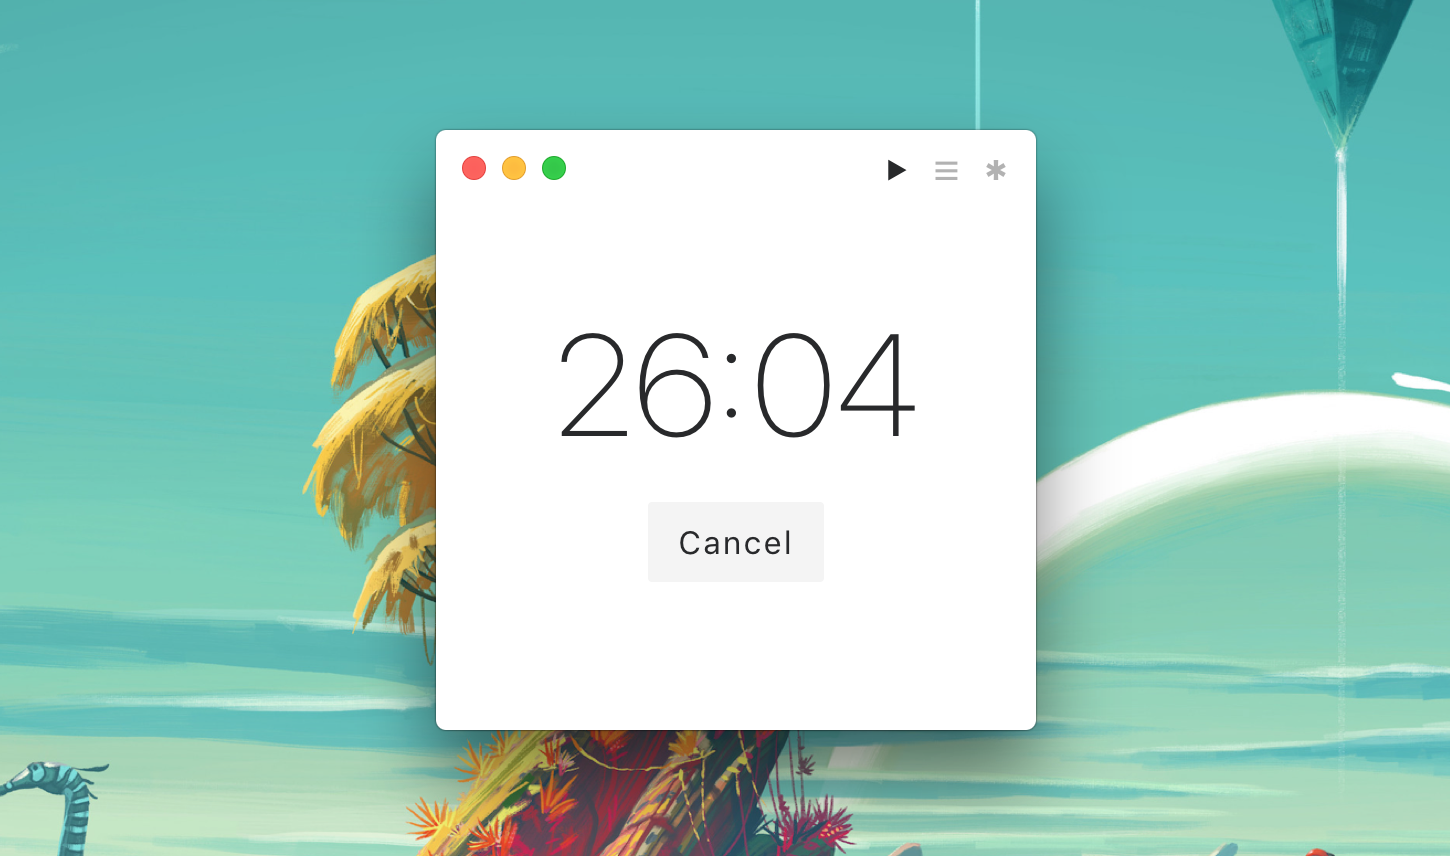 pomodoro timer app for windows